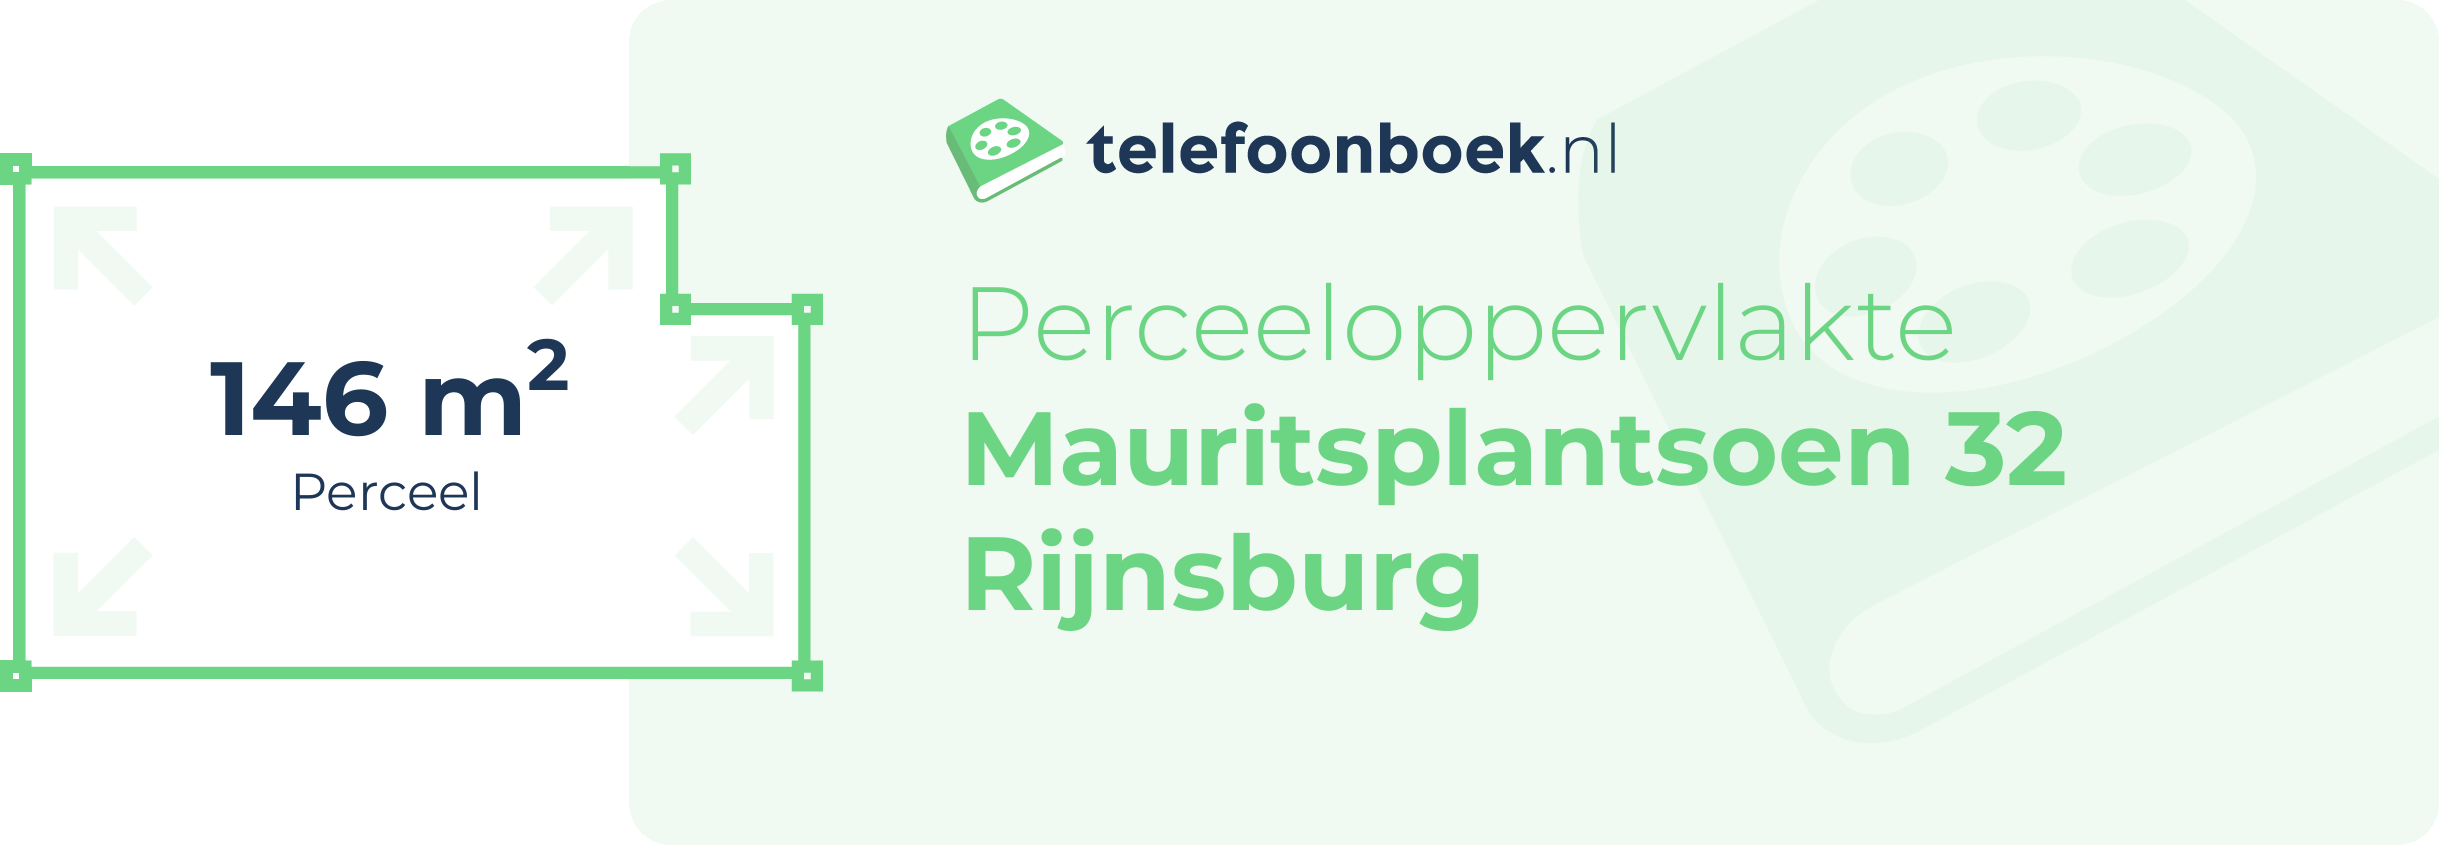 Perceeloppervlakte Mauritsplantsoen 32 Rijnsburg